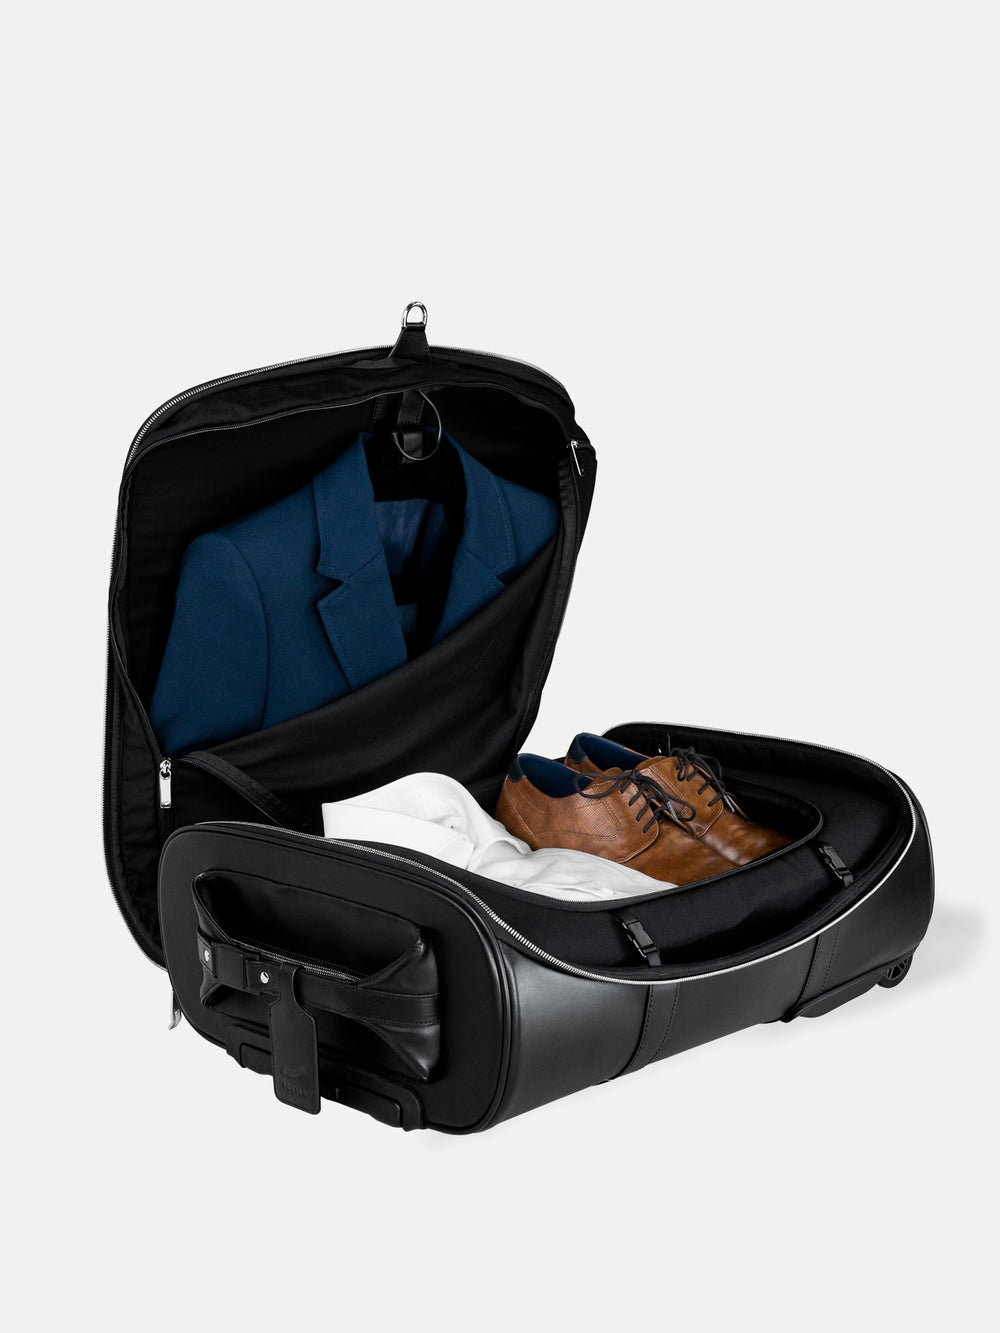 F25 Italian Leather Briefcase for Business & Travel | VOCIER